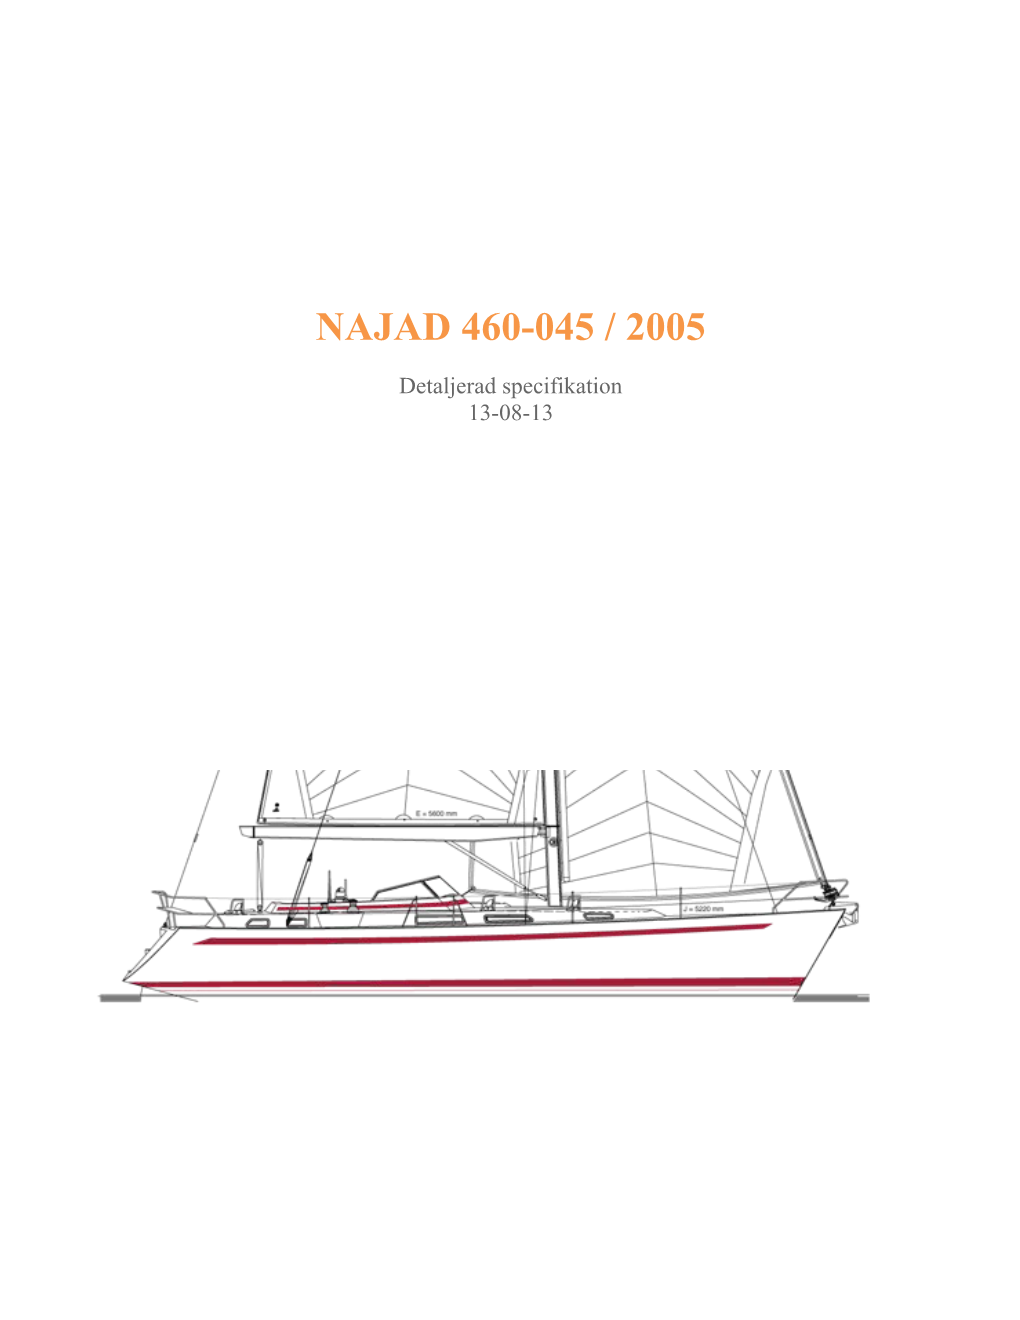 Najad 460 Is a Modern Blue Water Cruiser Designed by Judel/Vrolijk and Built by Najadvarvet